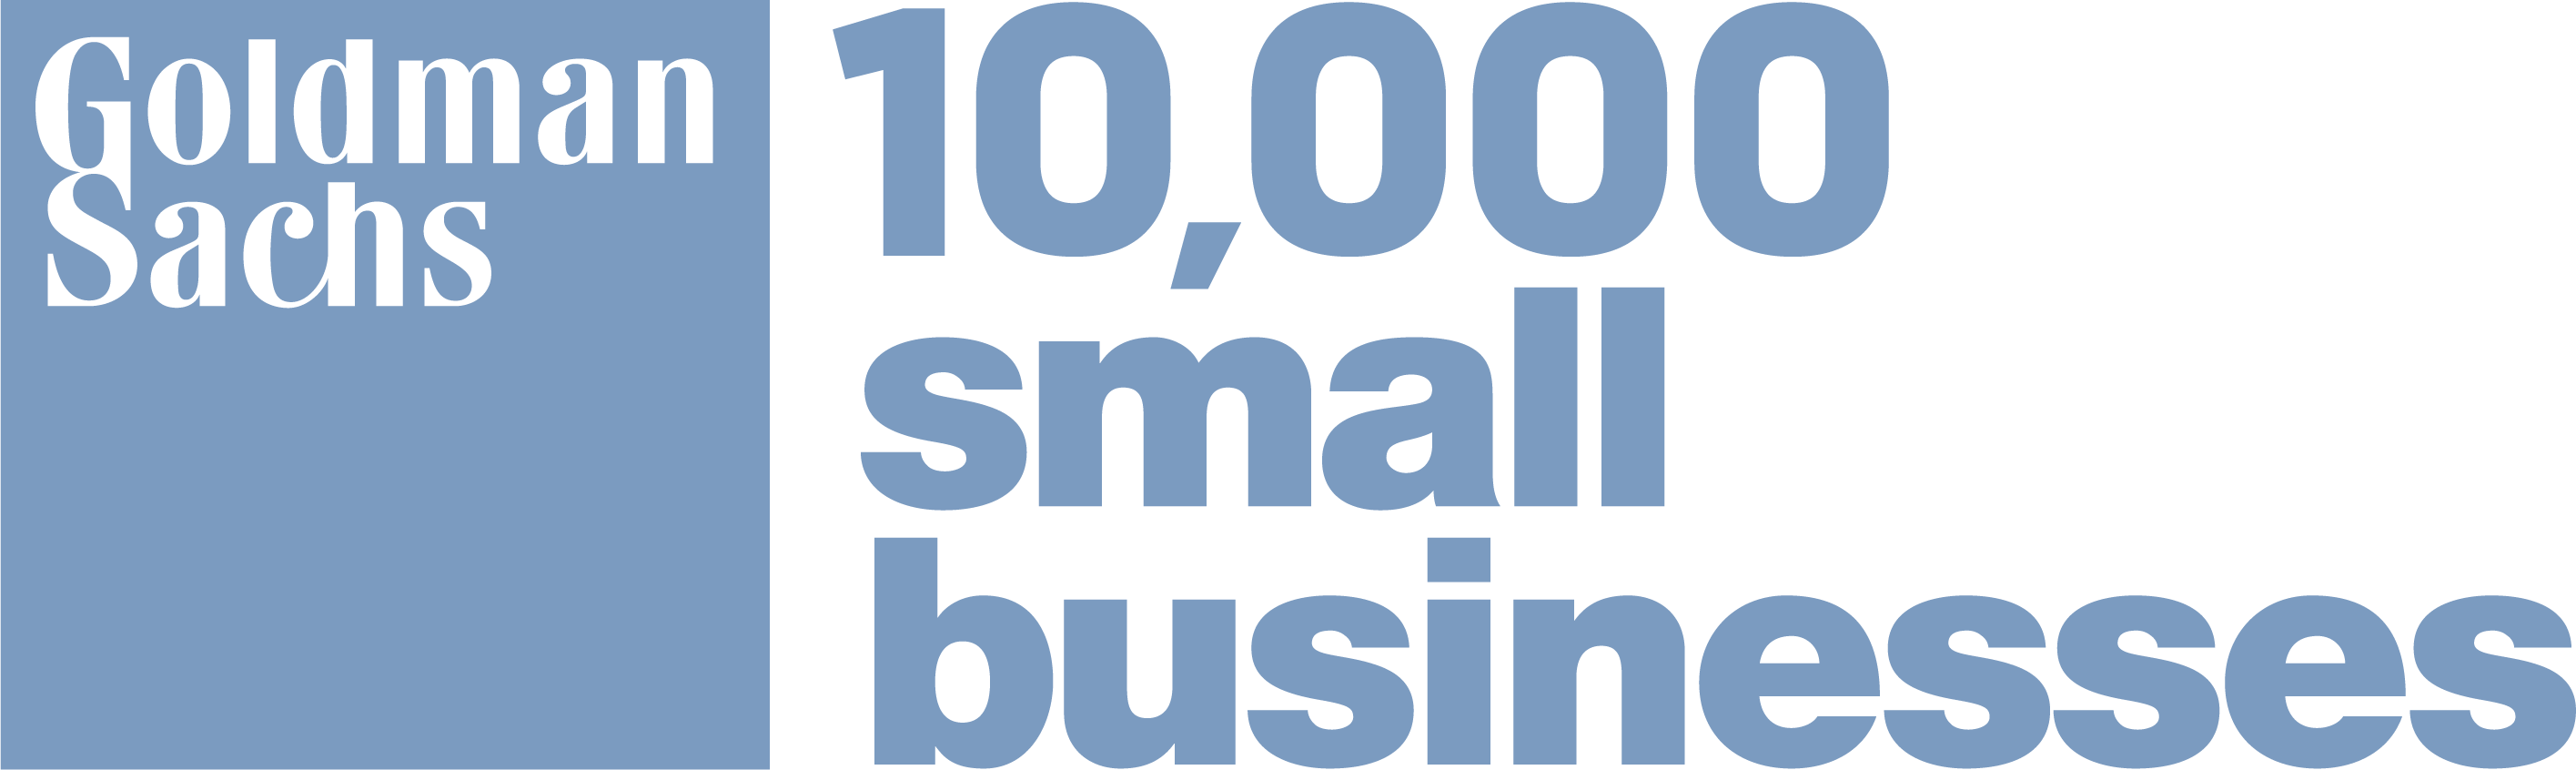 Goldman Sach 10000 Small Business Alumni (2831x846), Png Download